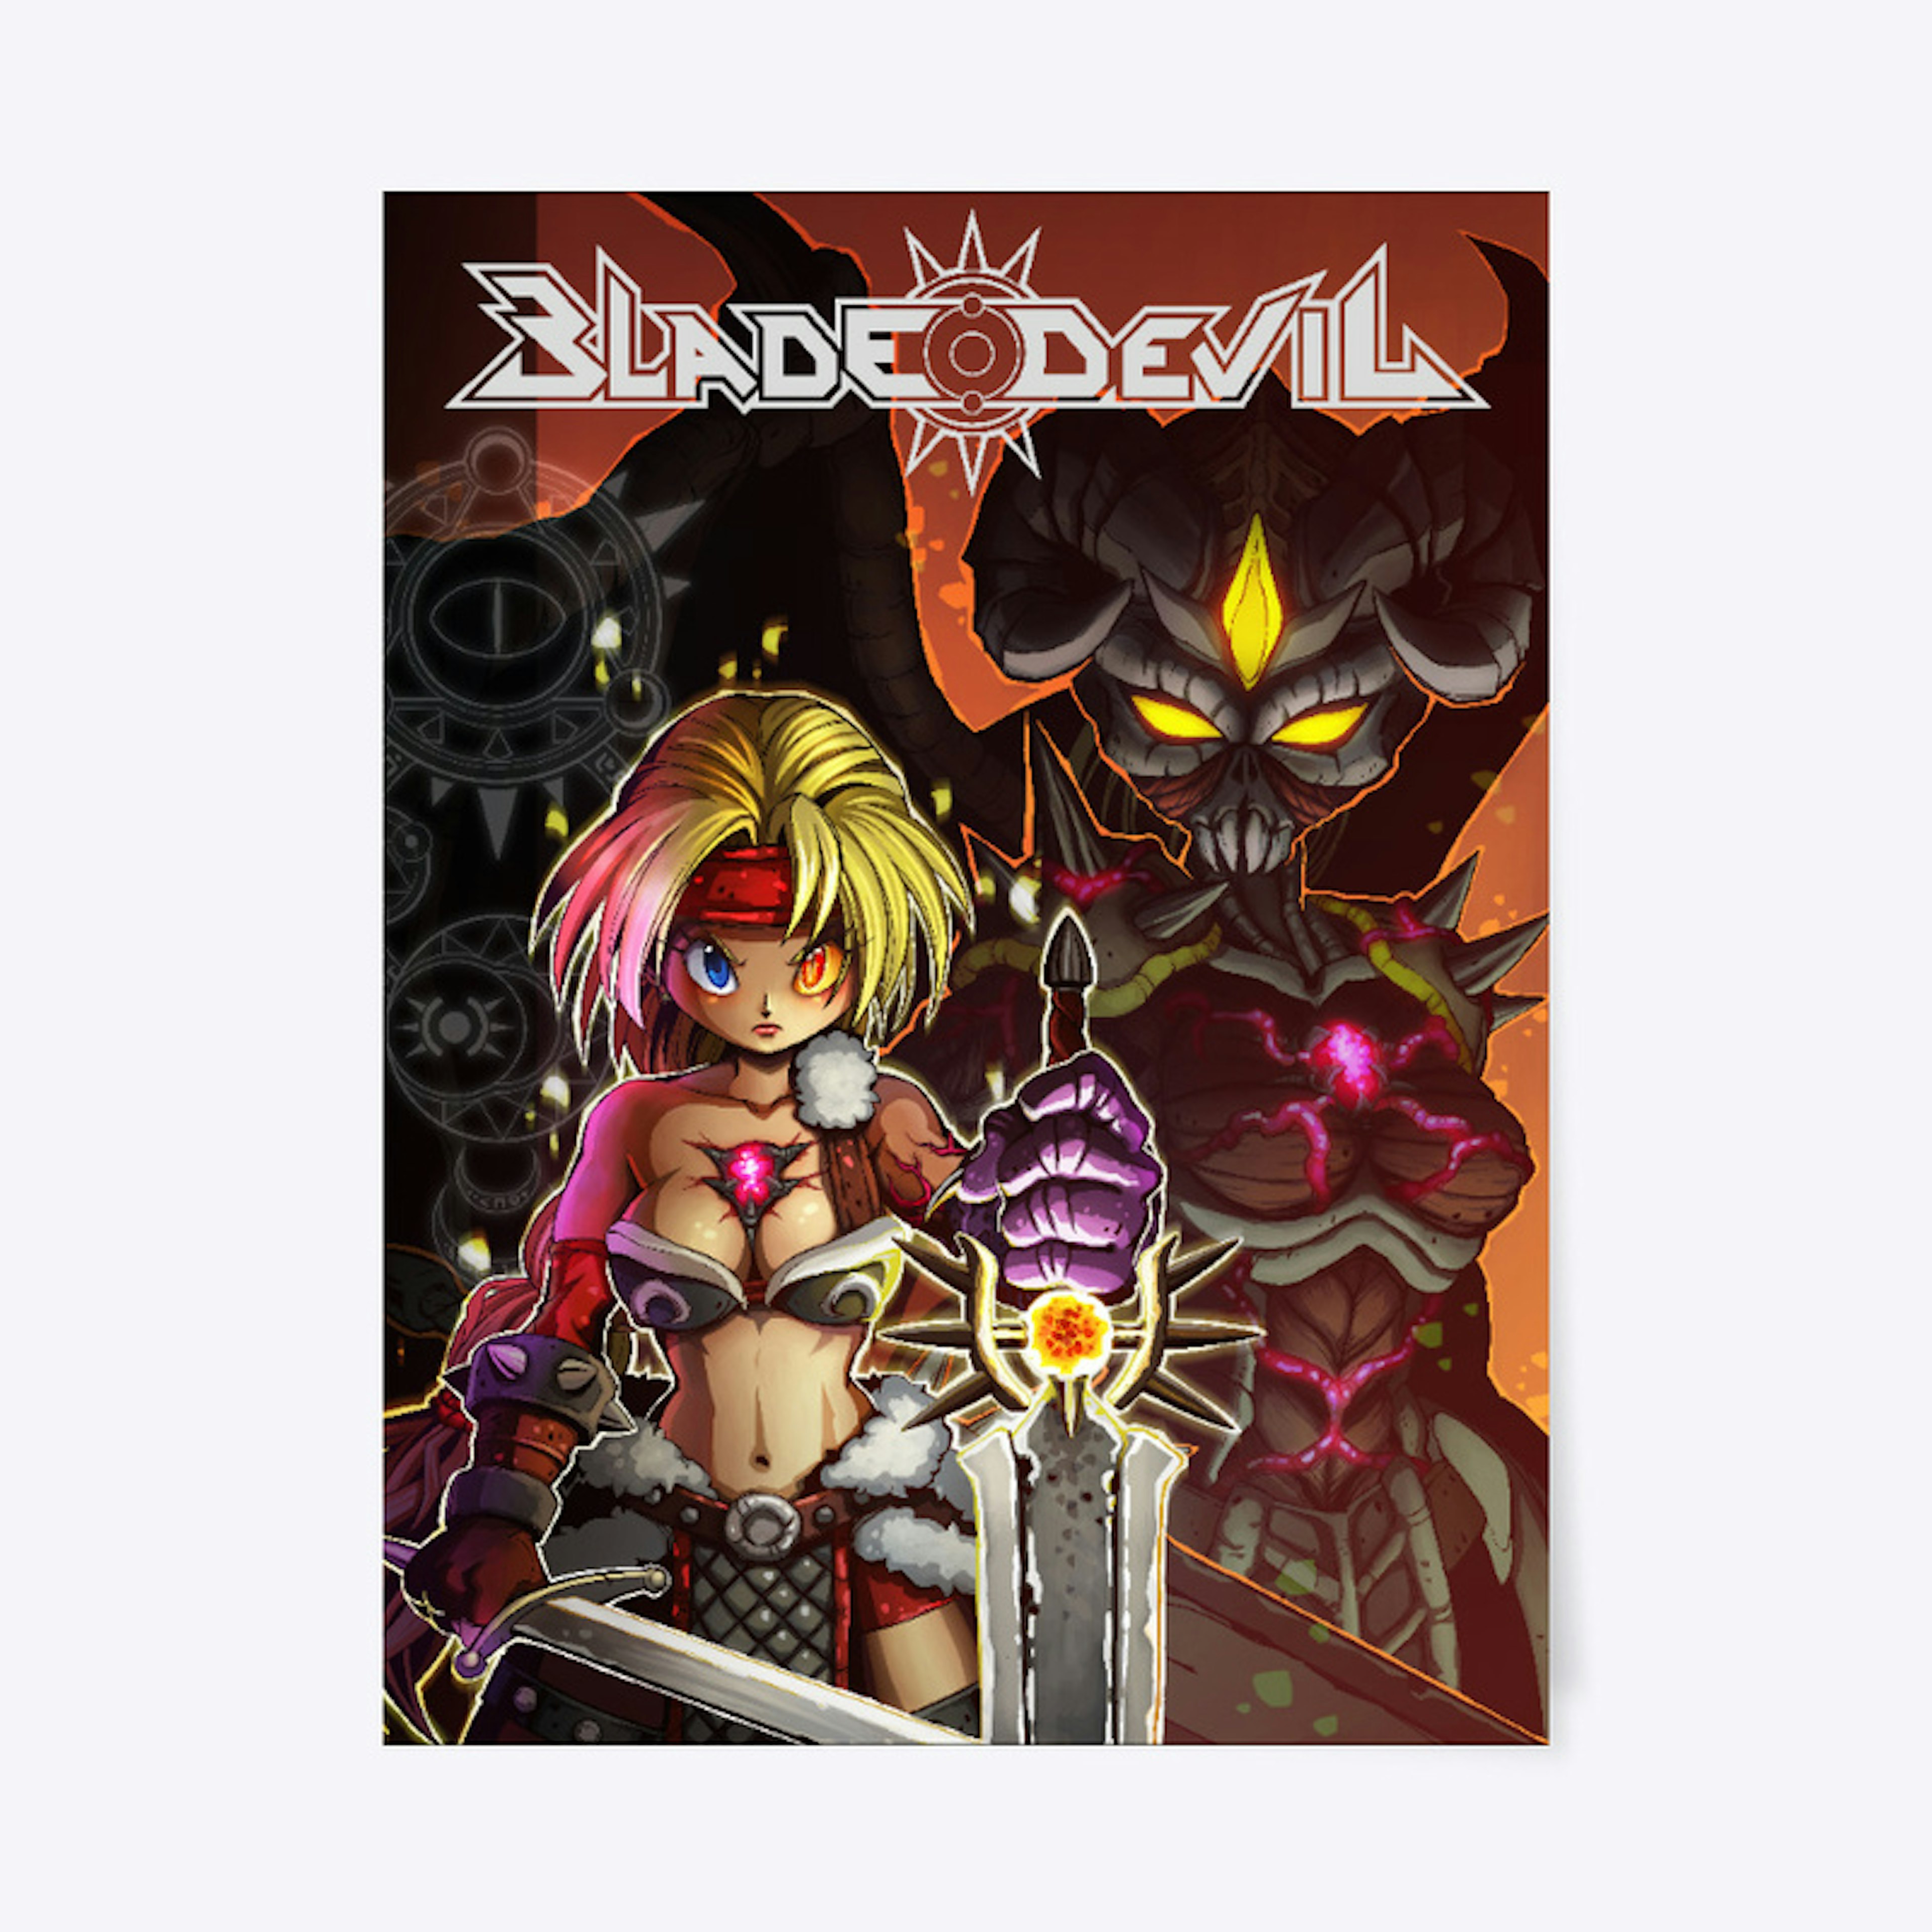 Blade Devil cover